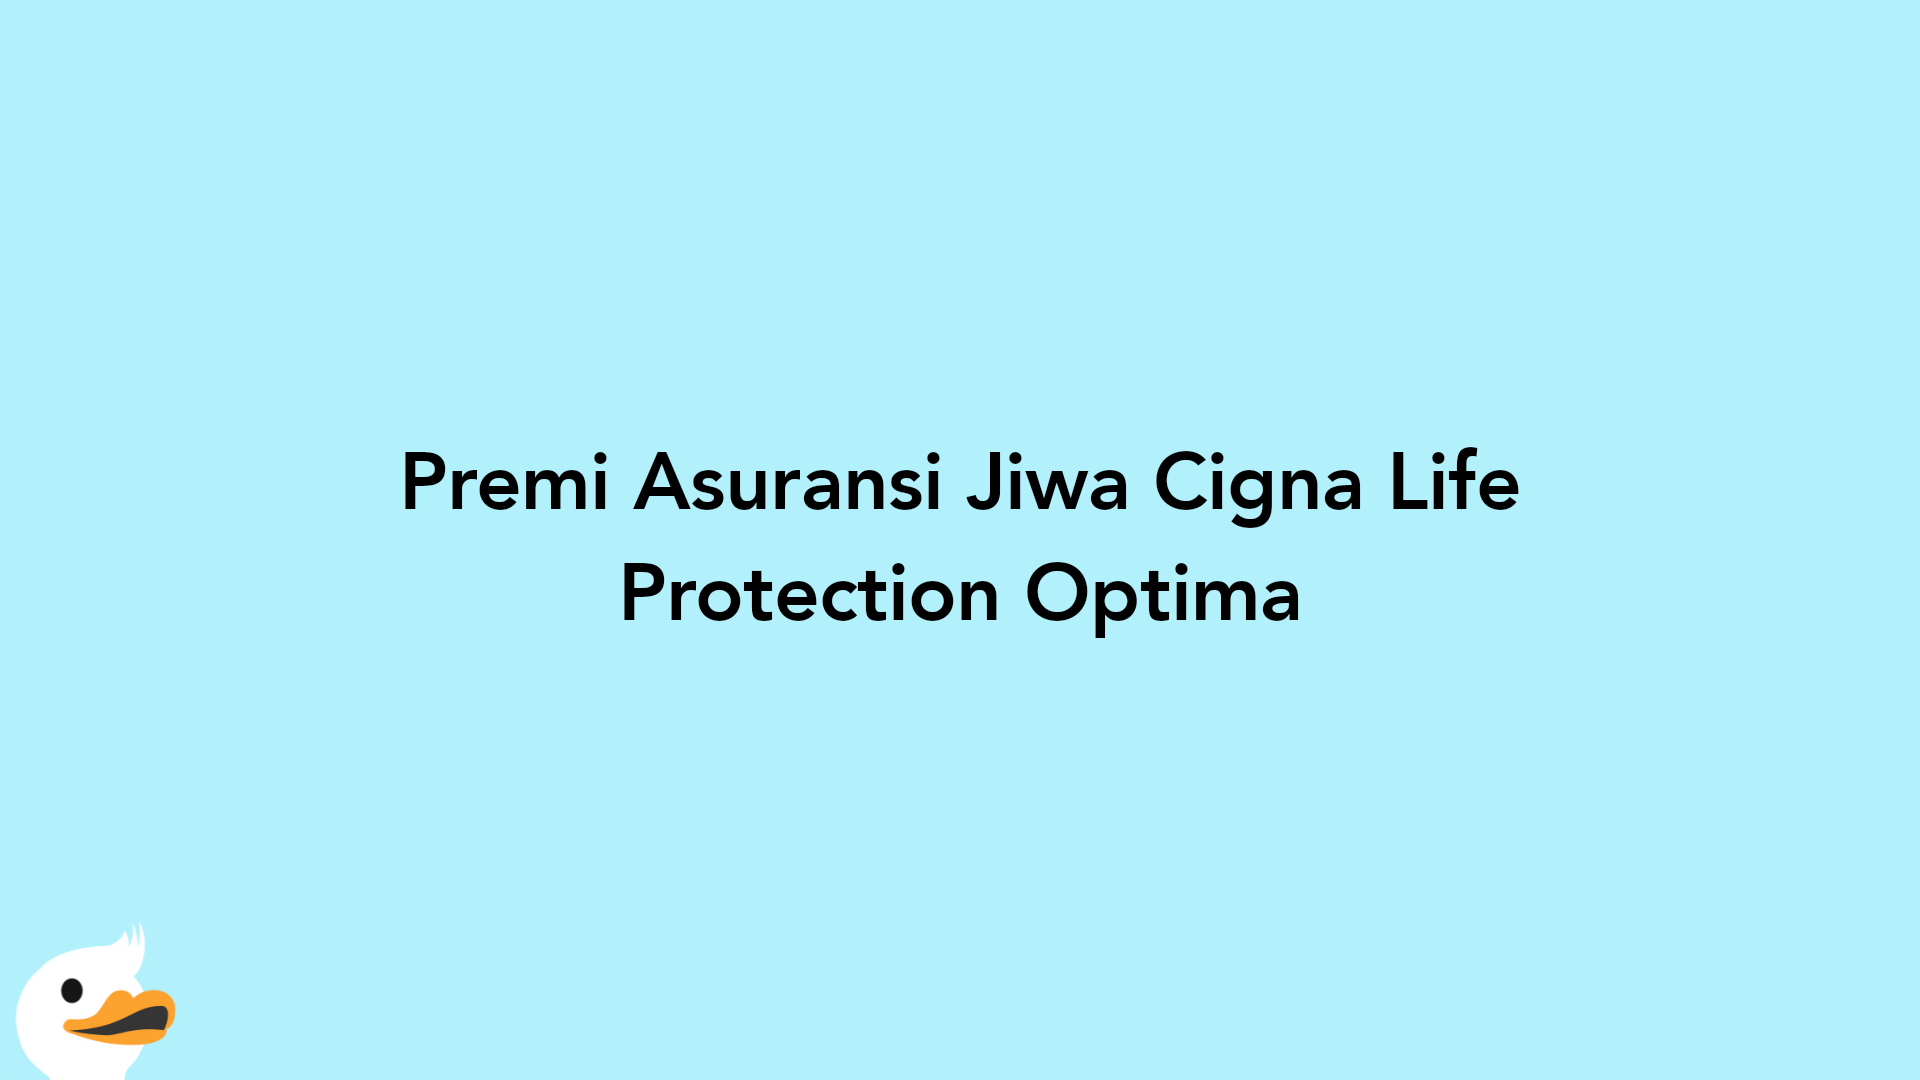 Premi Asuransi Jiwa Cigna Life Protection Optima